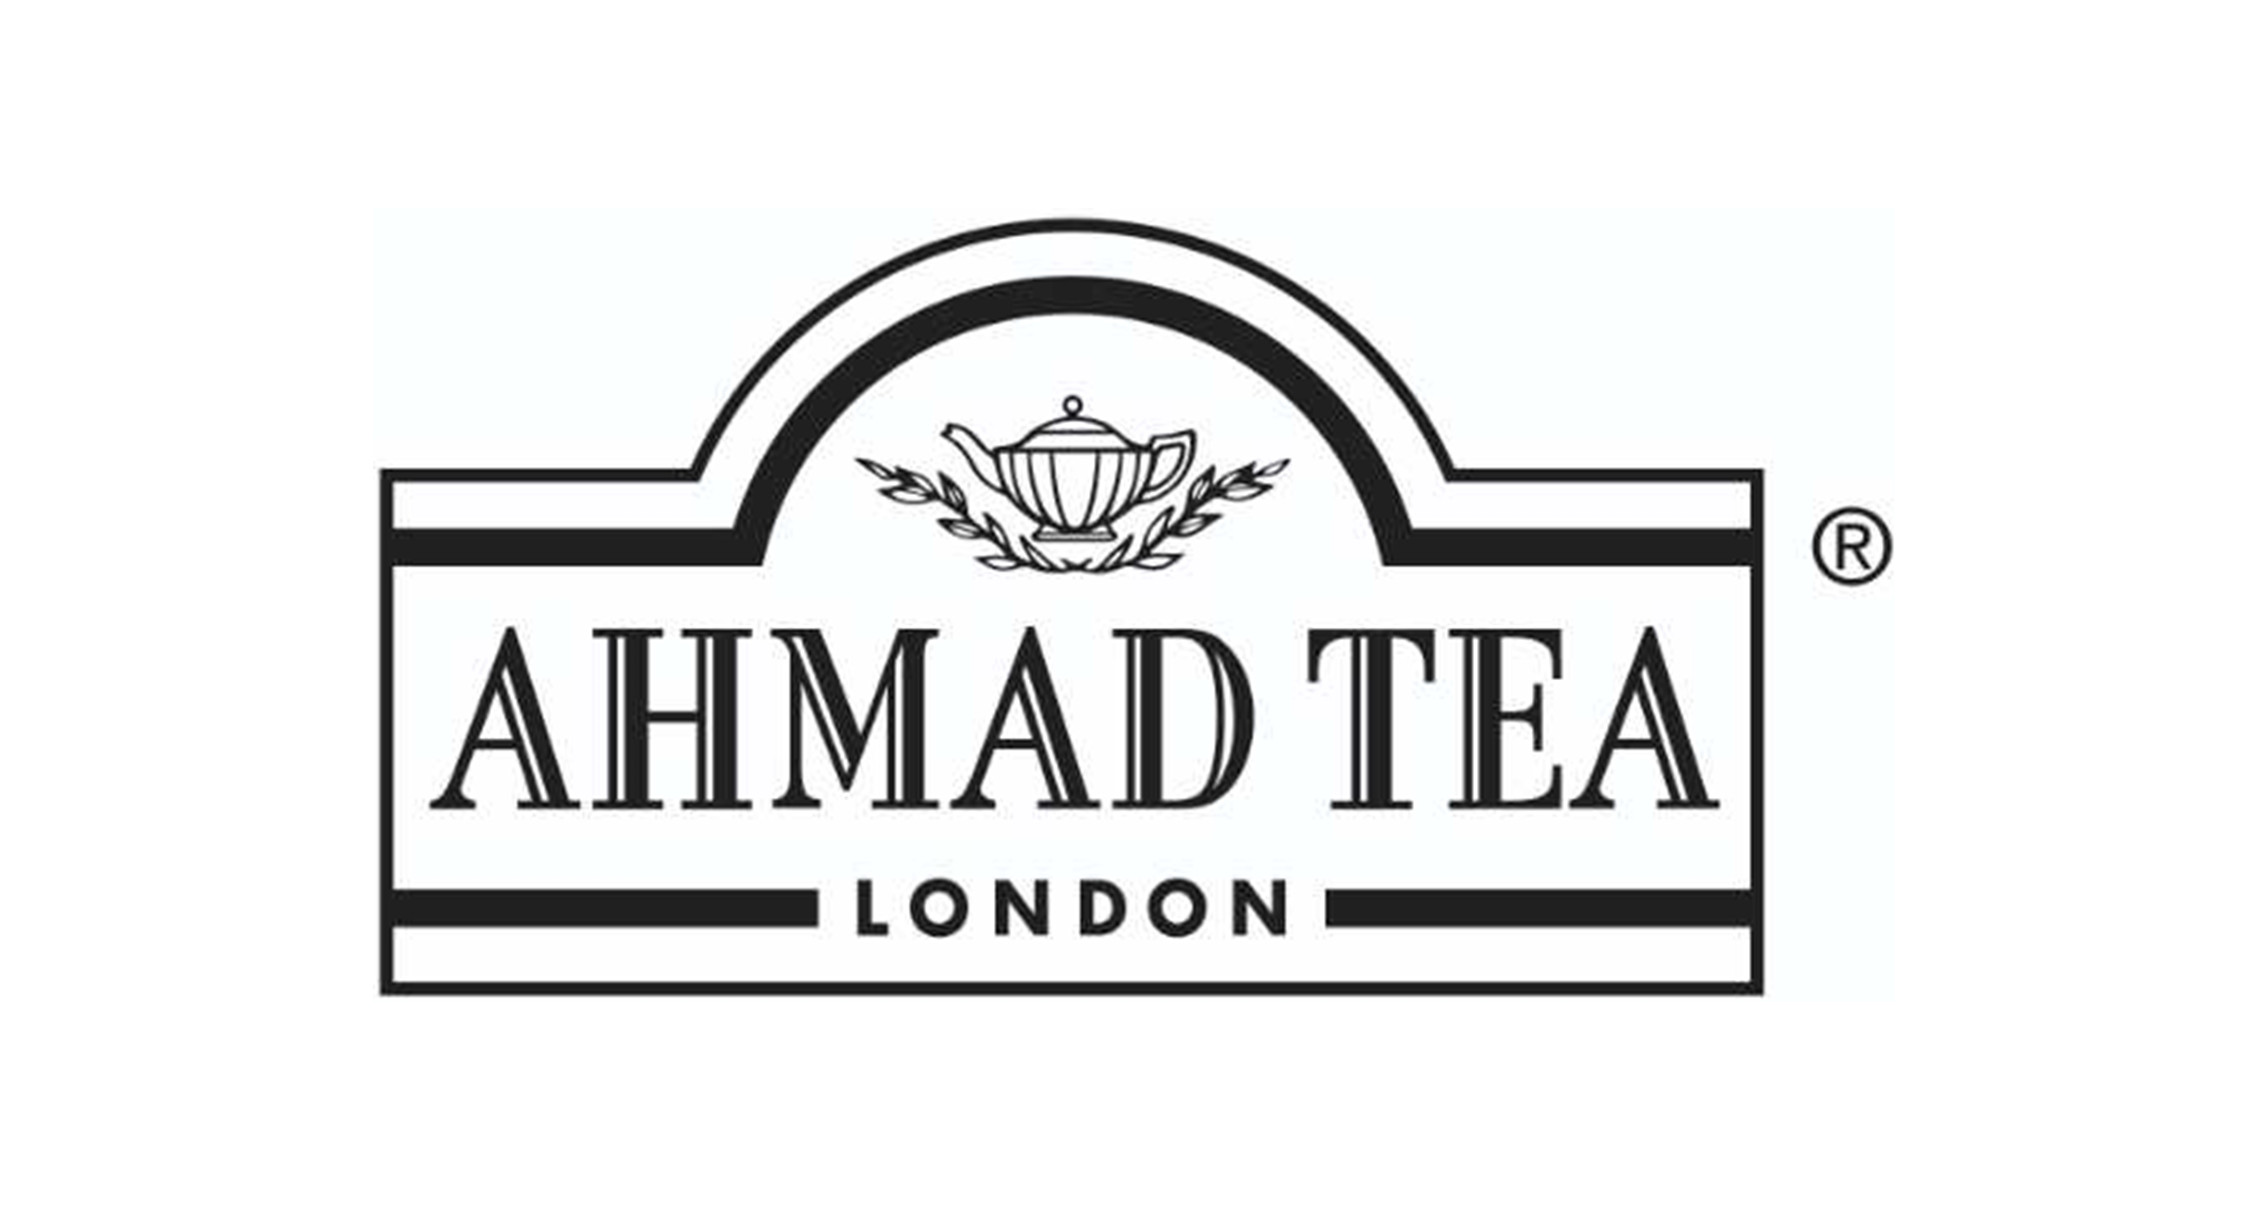 亚曼红茶 AHMAD TEA